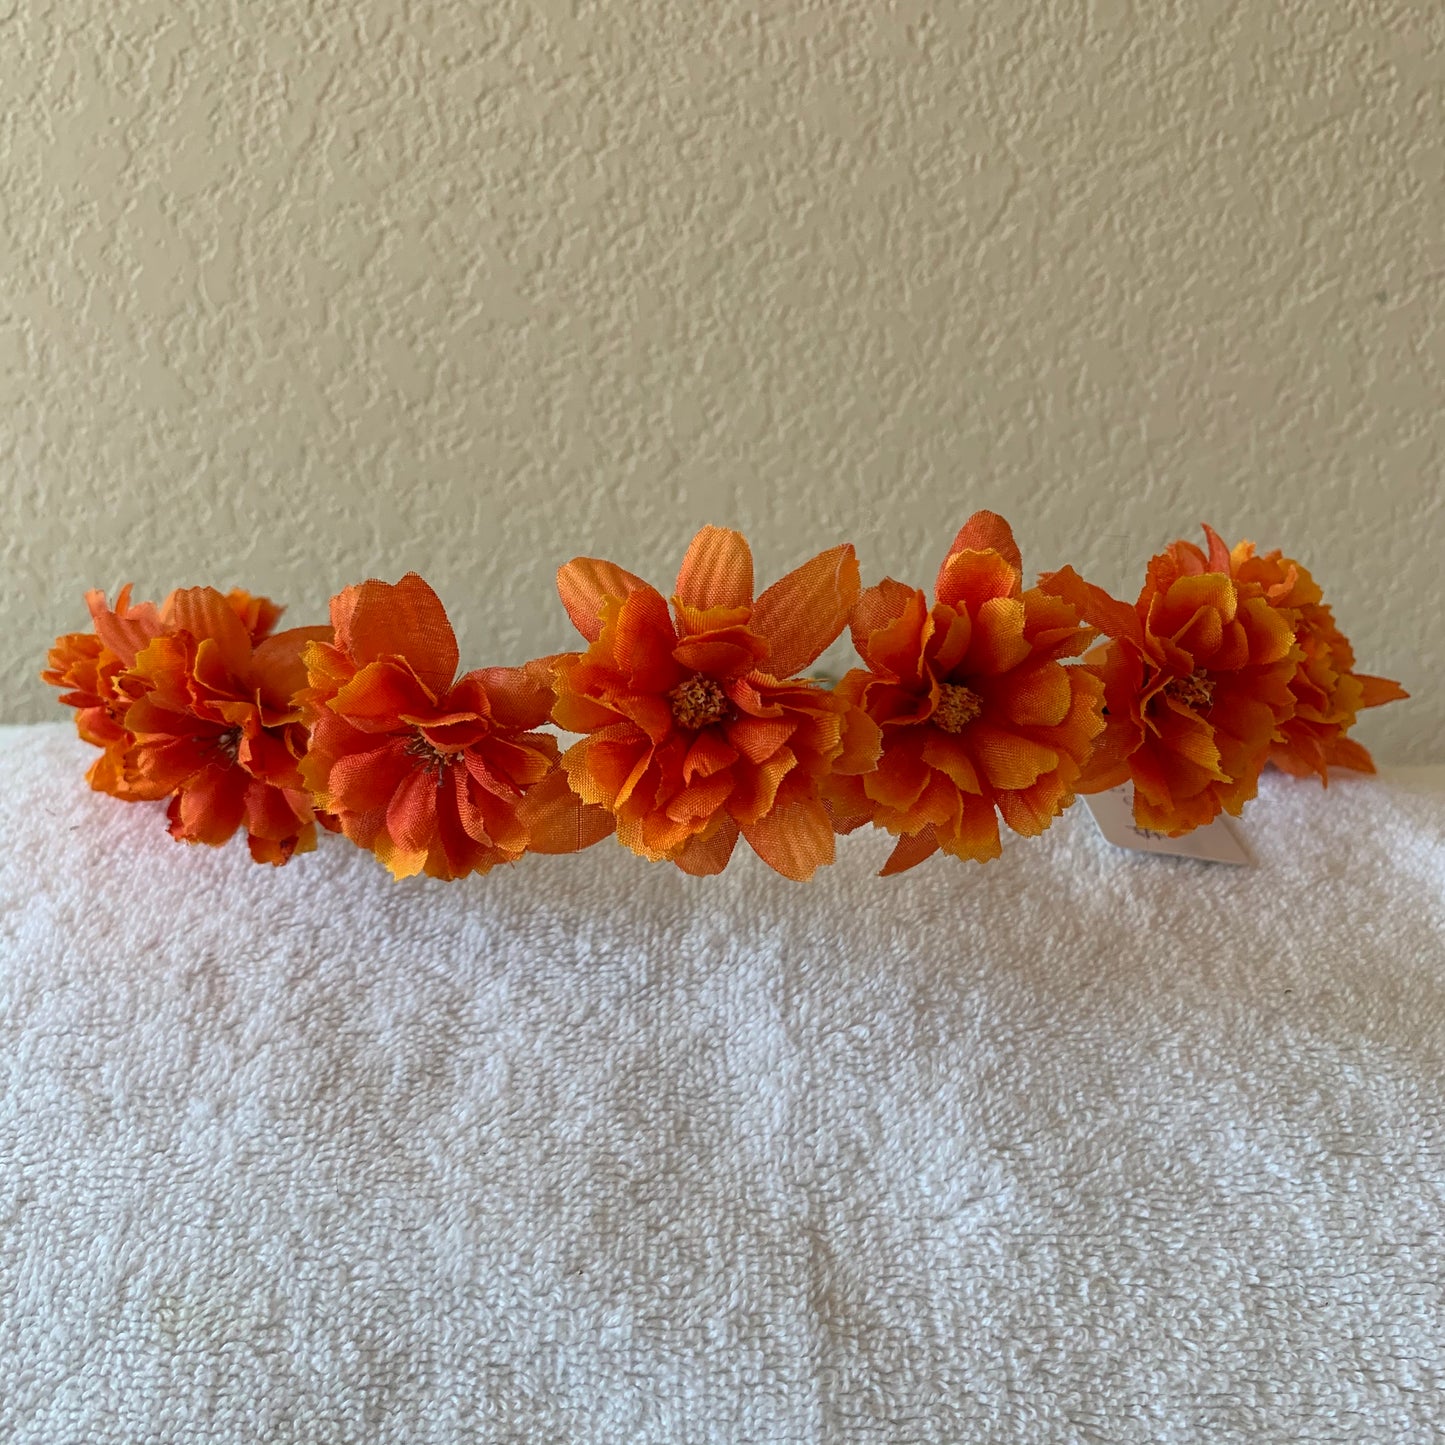 Small Wreath Lighted - All Orange Flowers